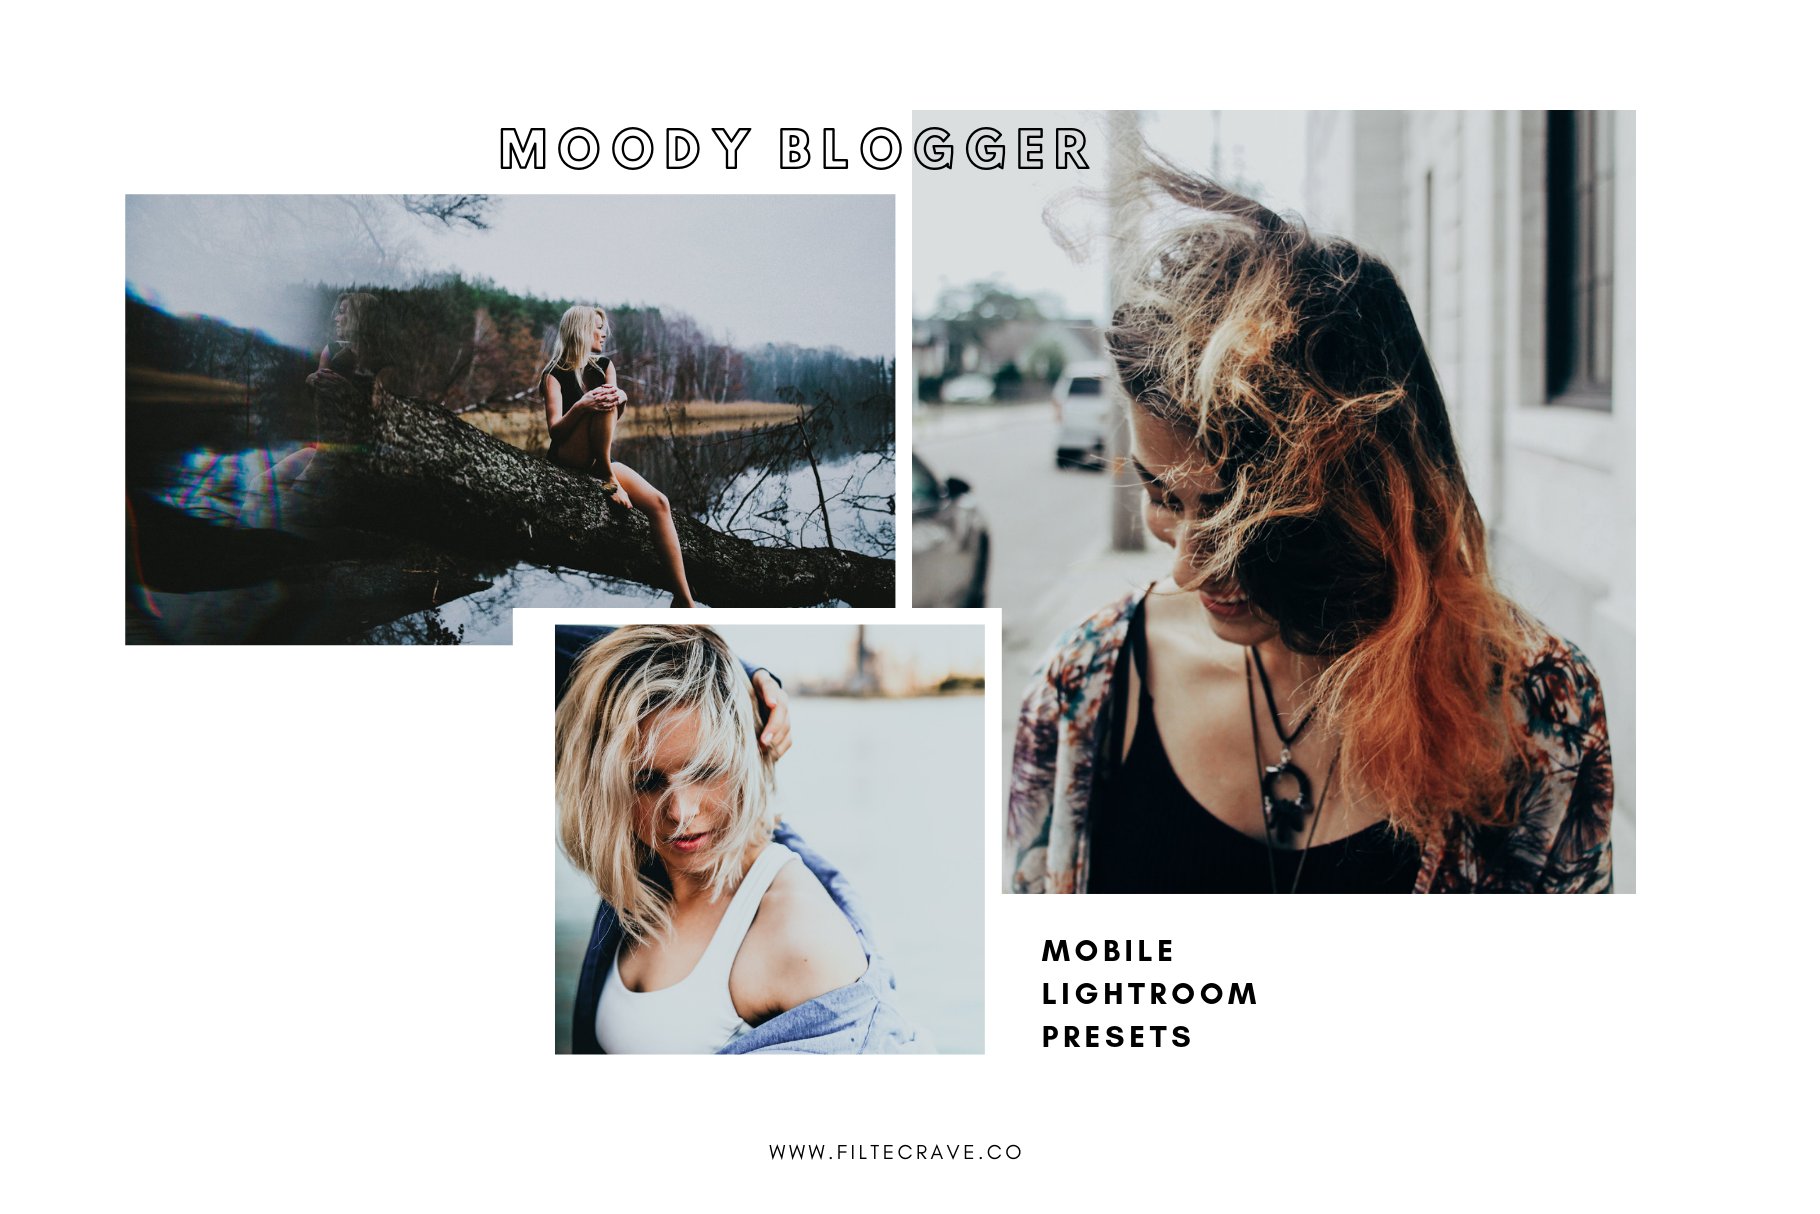 moody blogger mobile presets filtercrave 9 210